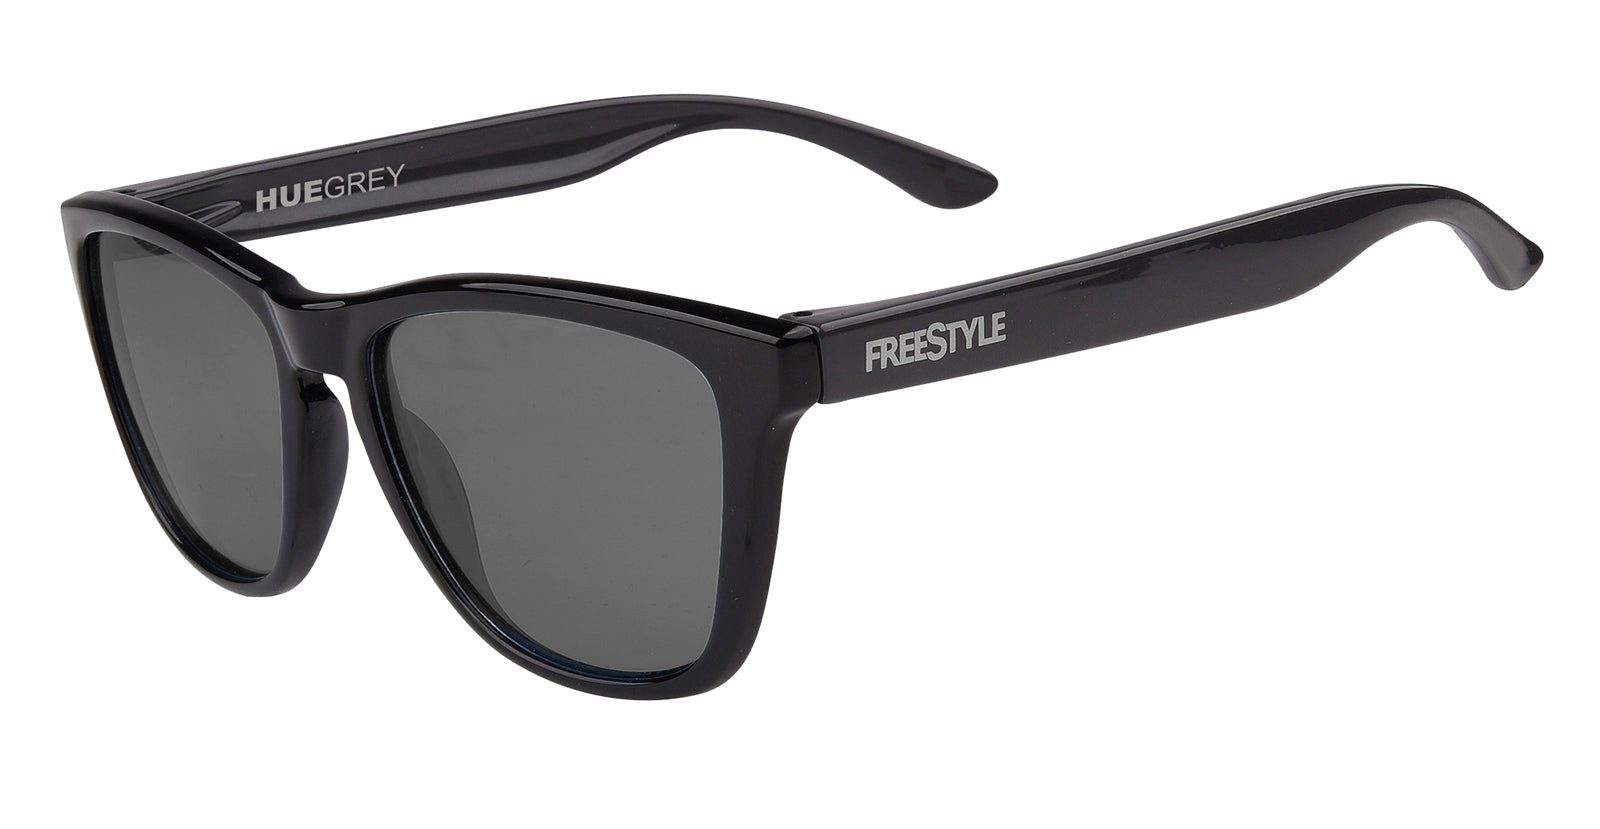 SPRO Sonnenbrille Spro Freestyle Hue Shades polarisierende Sonnenbrille Polbrille - Grey